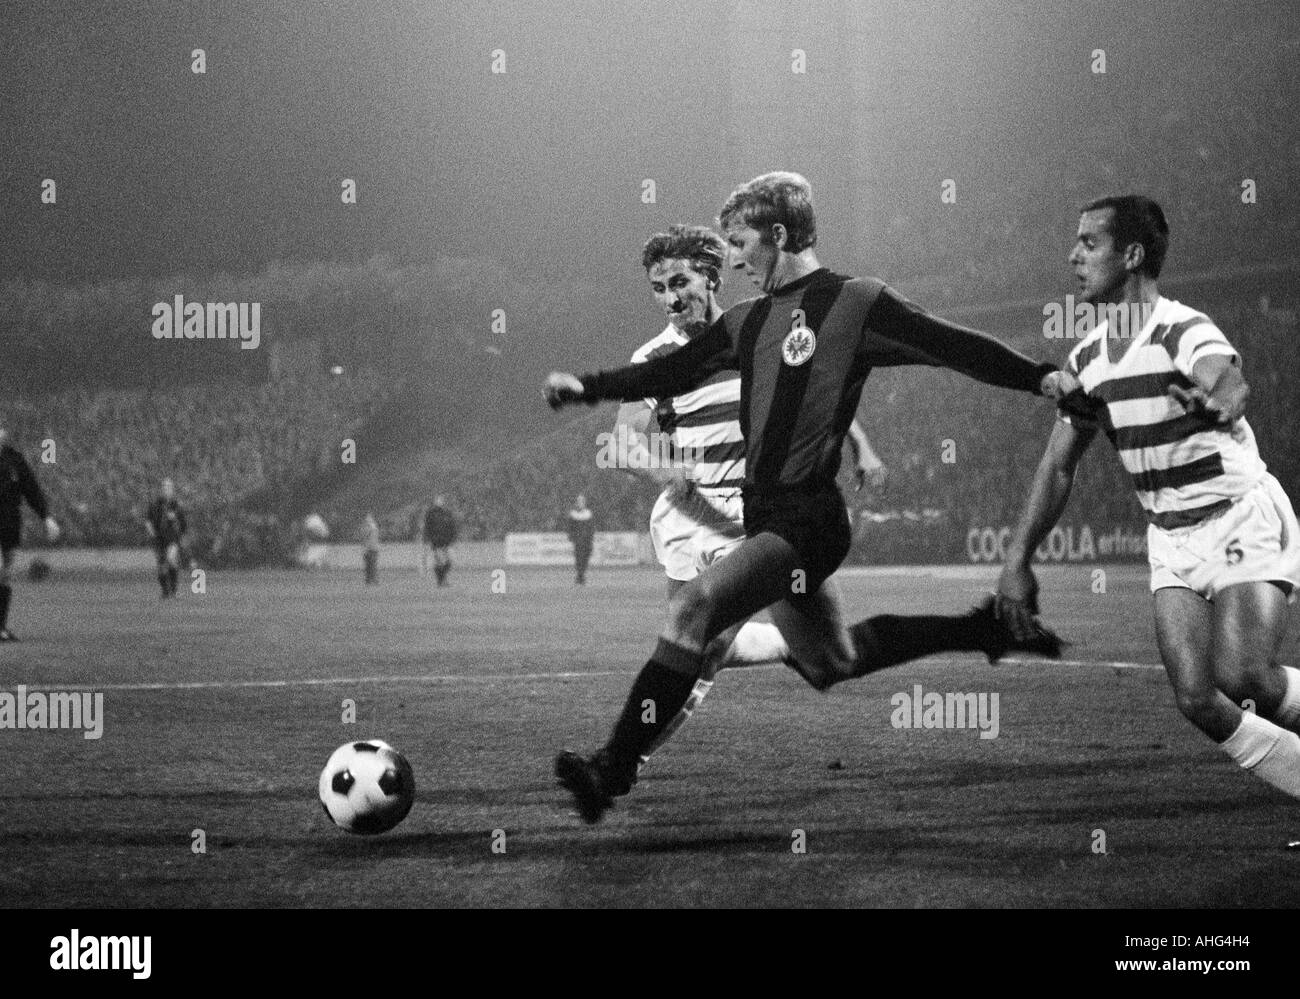 Calcio, Bundesliga, 1967/1968, Wedau Stadium di Duisburg, MSV Duisburg contro Eintracht Frankfurt 0:1, scena del match, f.l.t.r. Manfred Mueller (MSV), Juergen Grabowski (Francoforte), Johann Sabath (MSV) Foto Stock